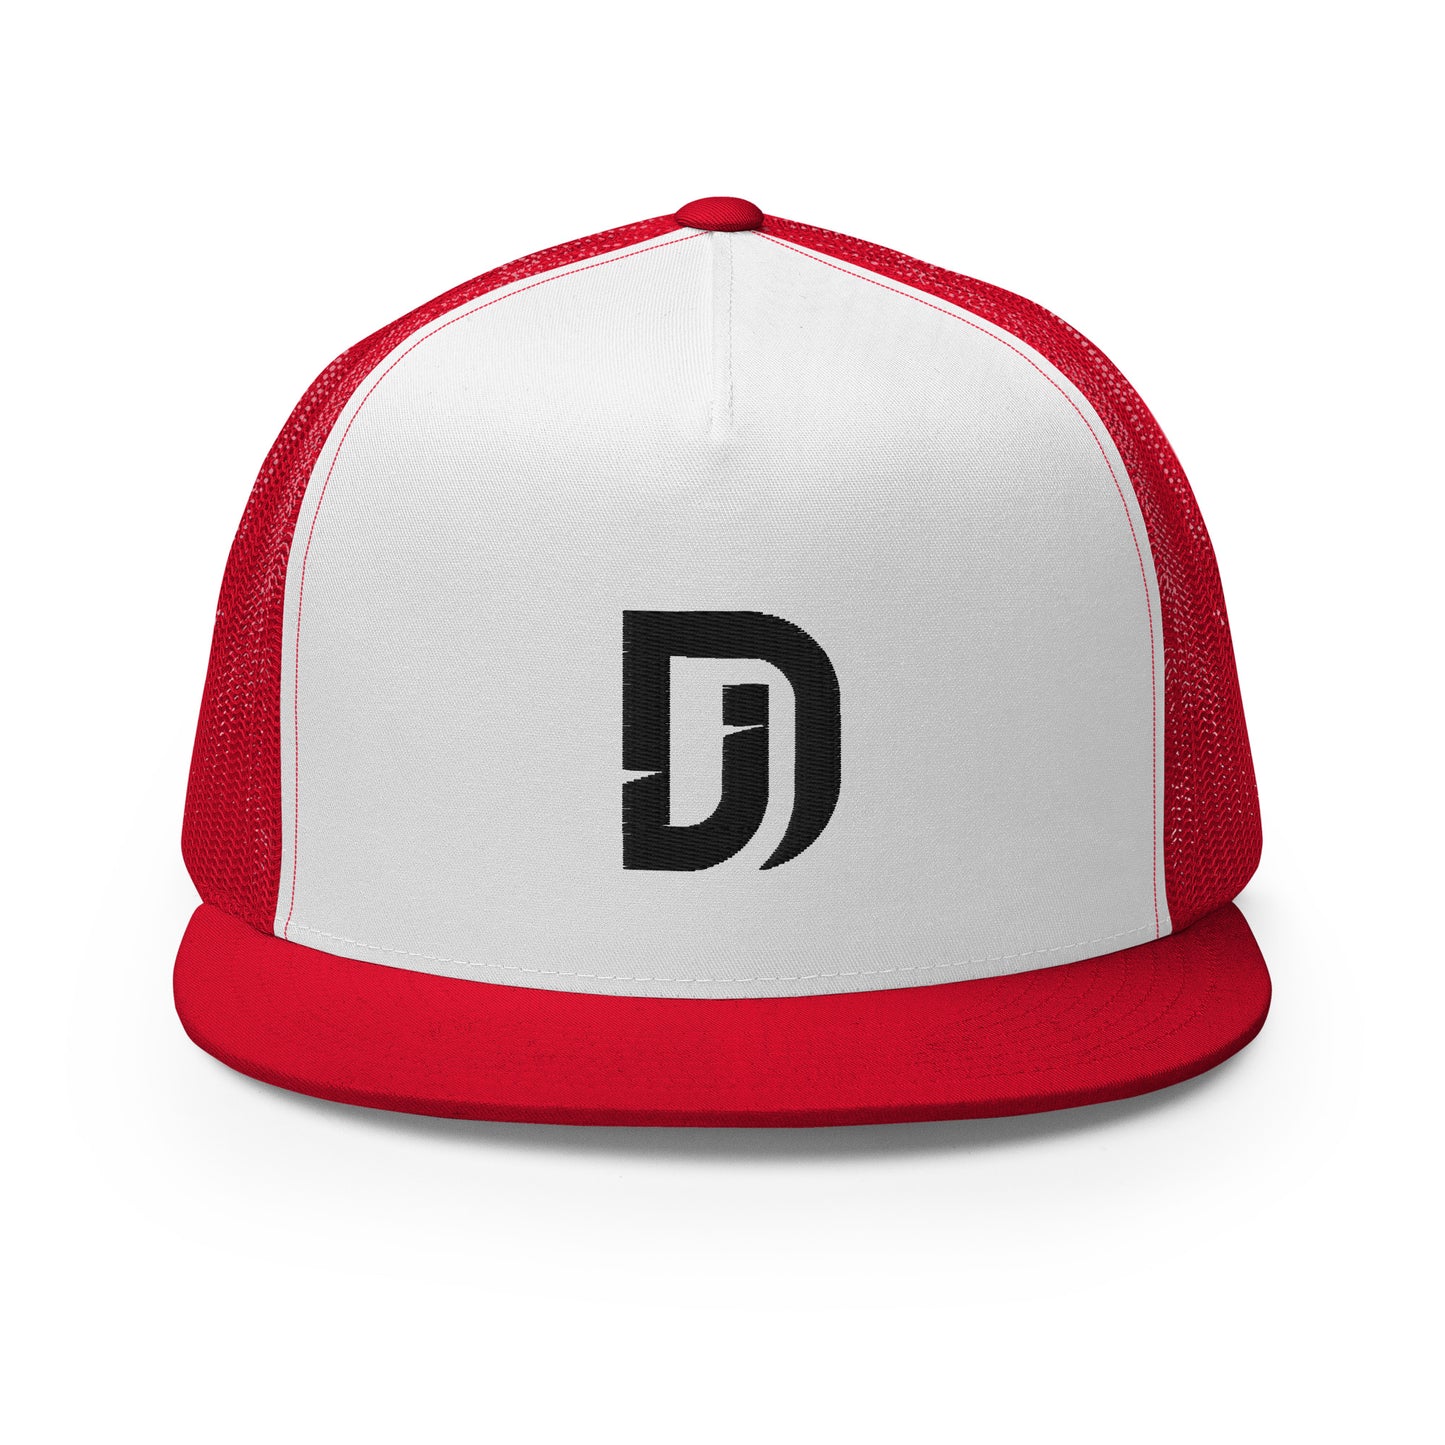 Dalyn Johnson "DJ" Trucker Cap